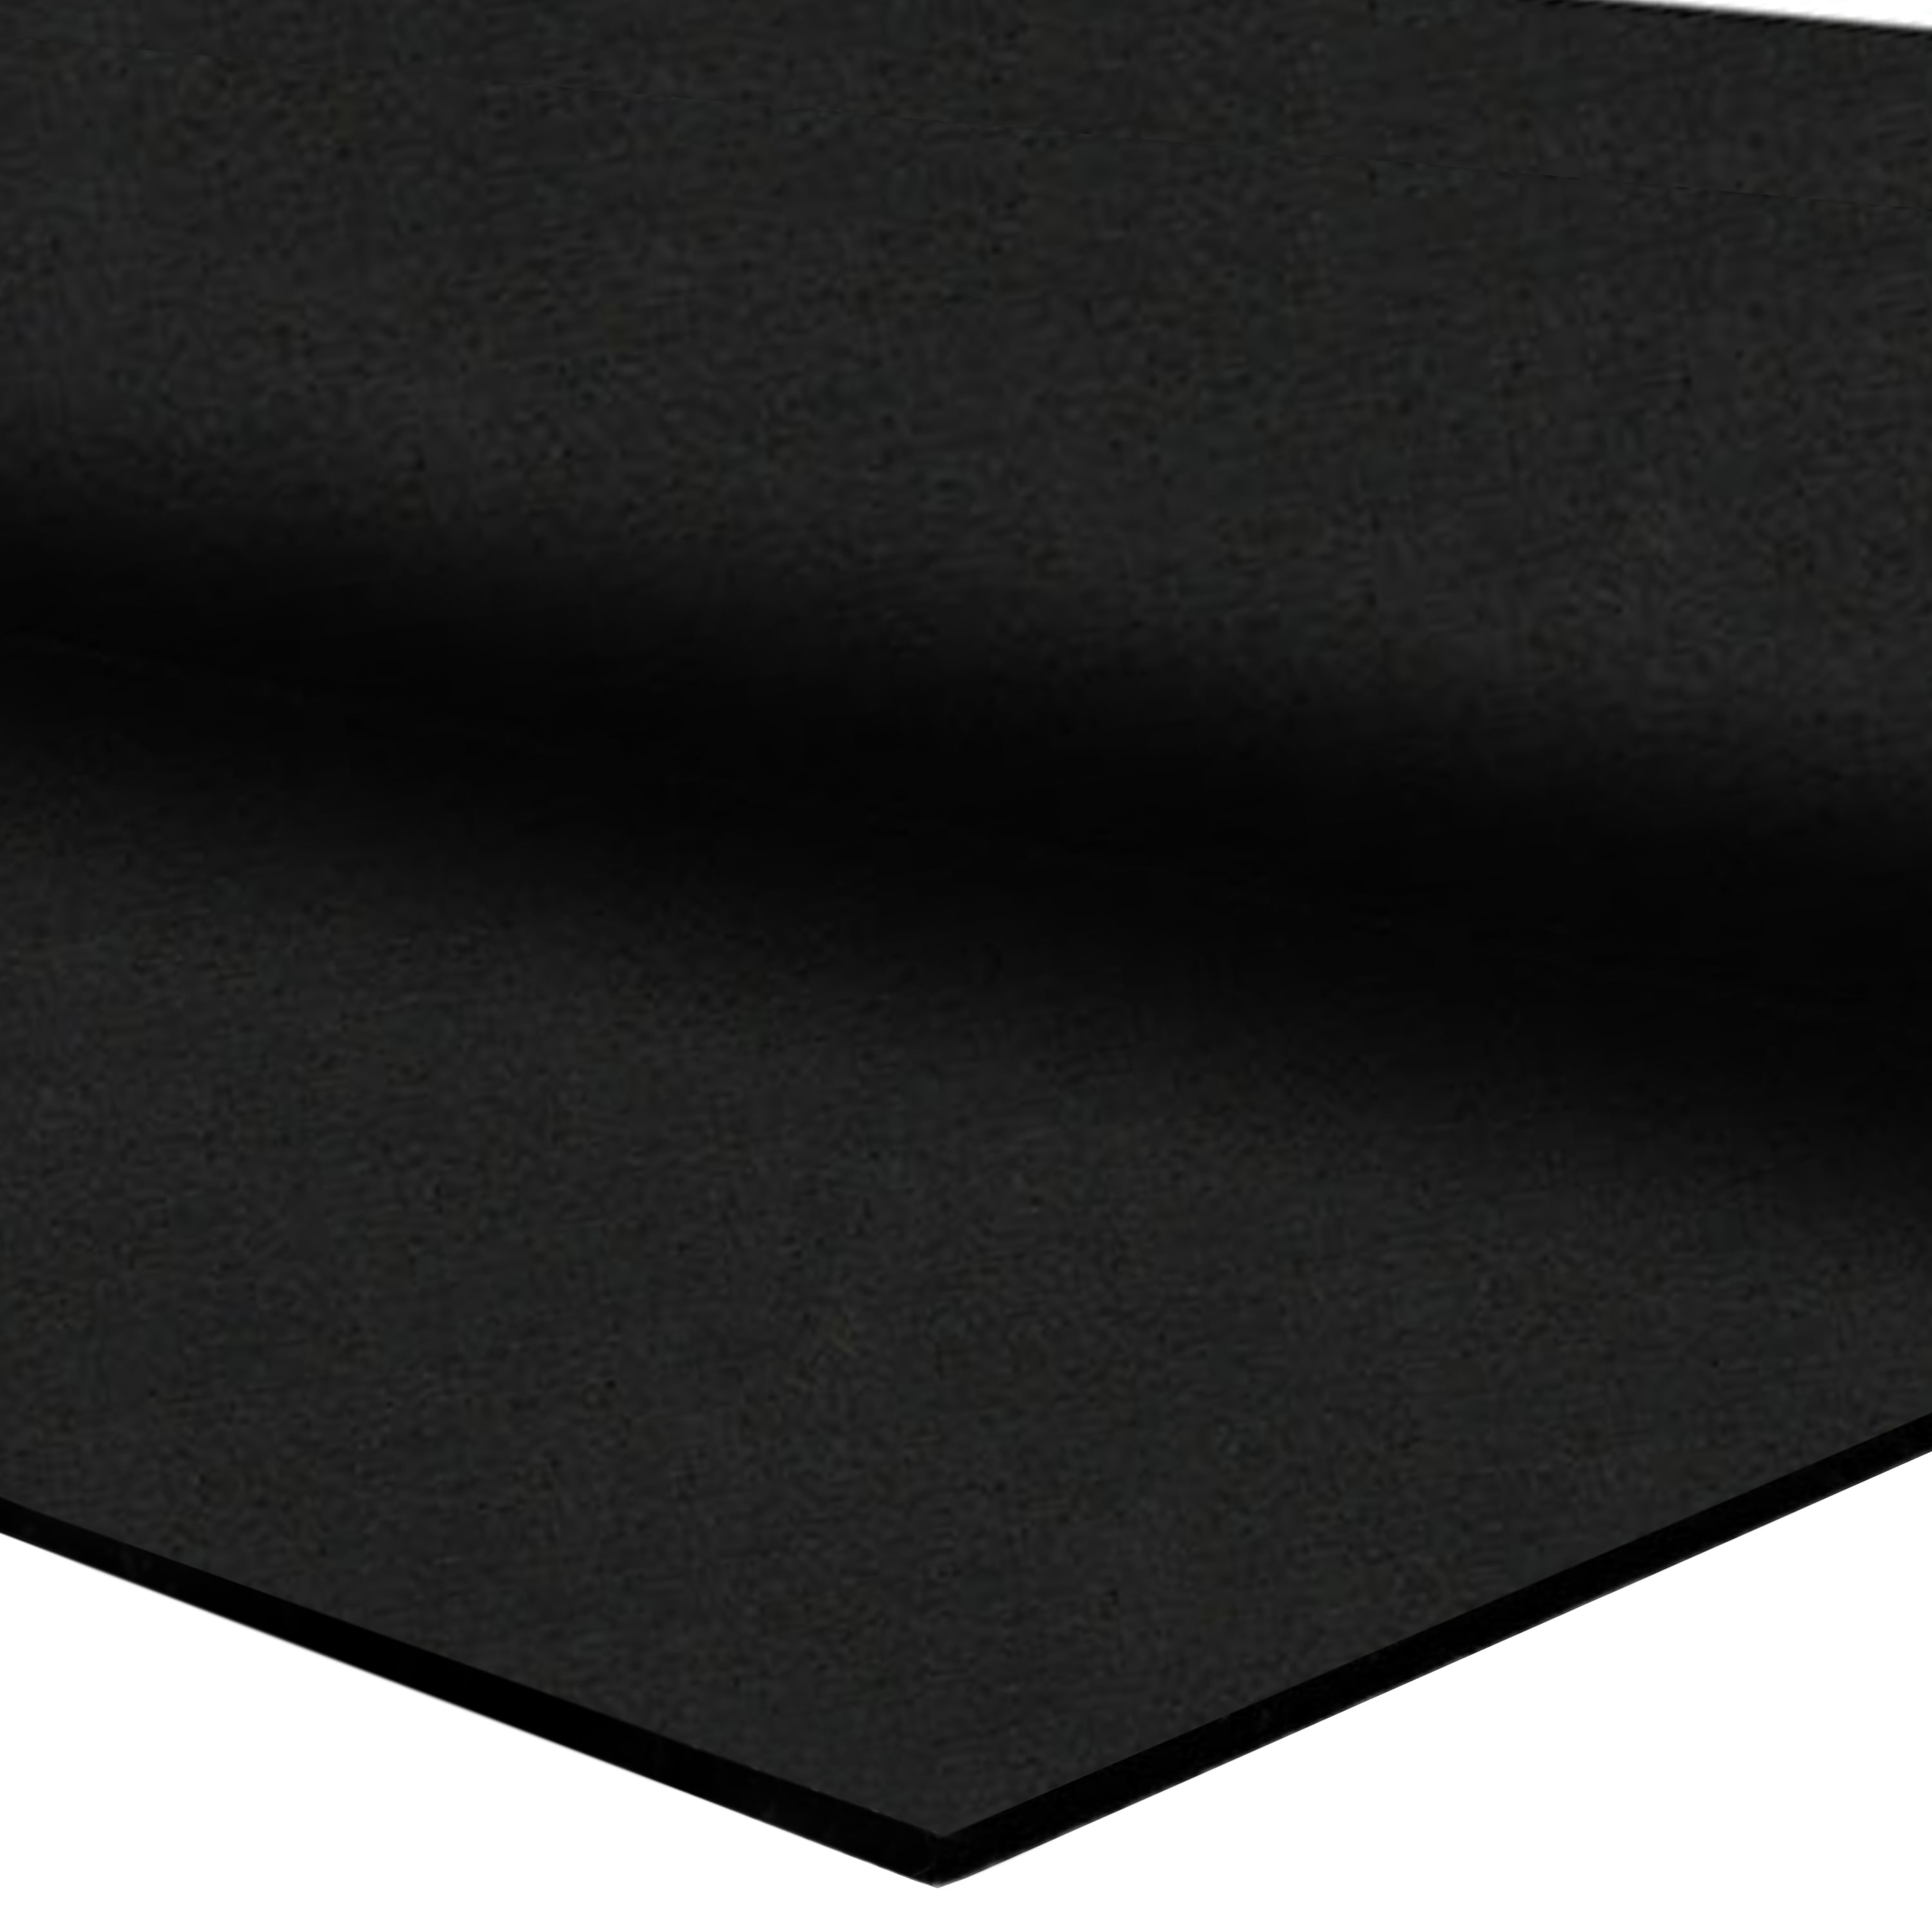 FlooringInc 1/4 Thick Tough Gym Floor & Equipment Mats, 4'x10', Black